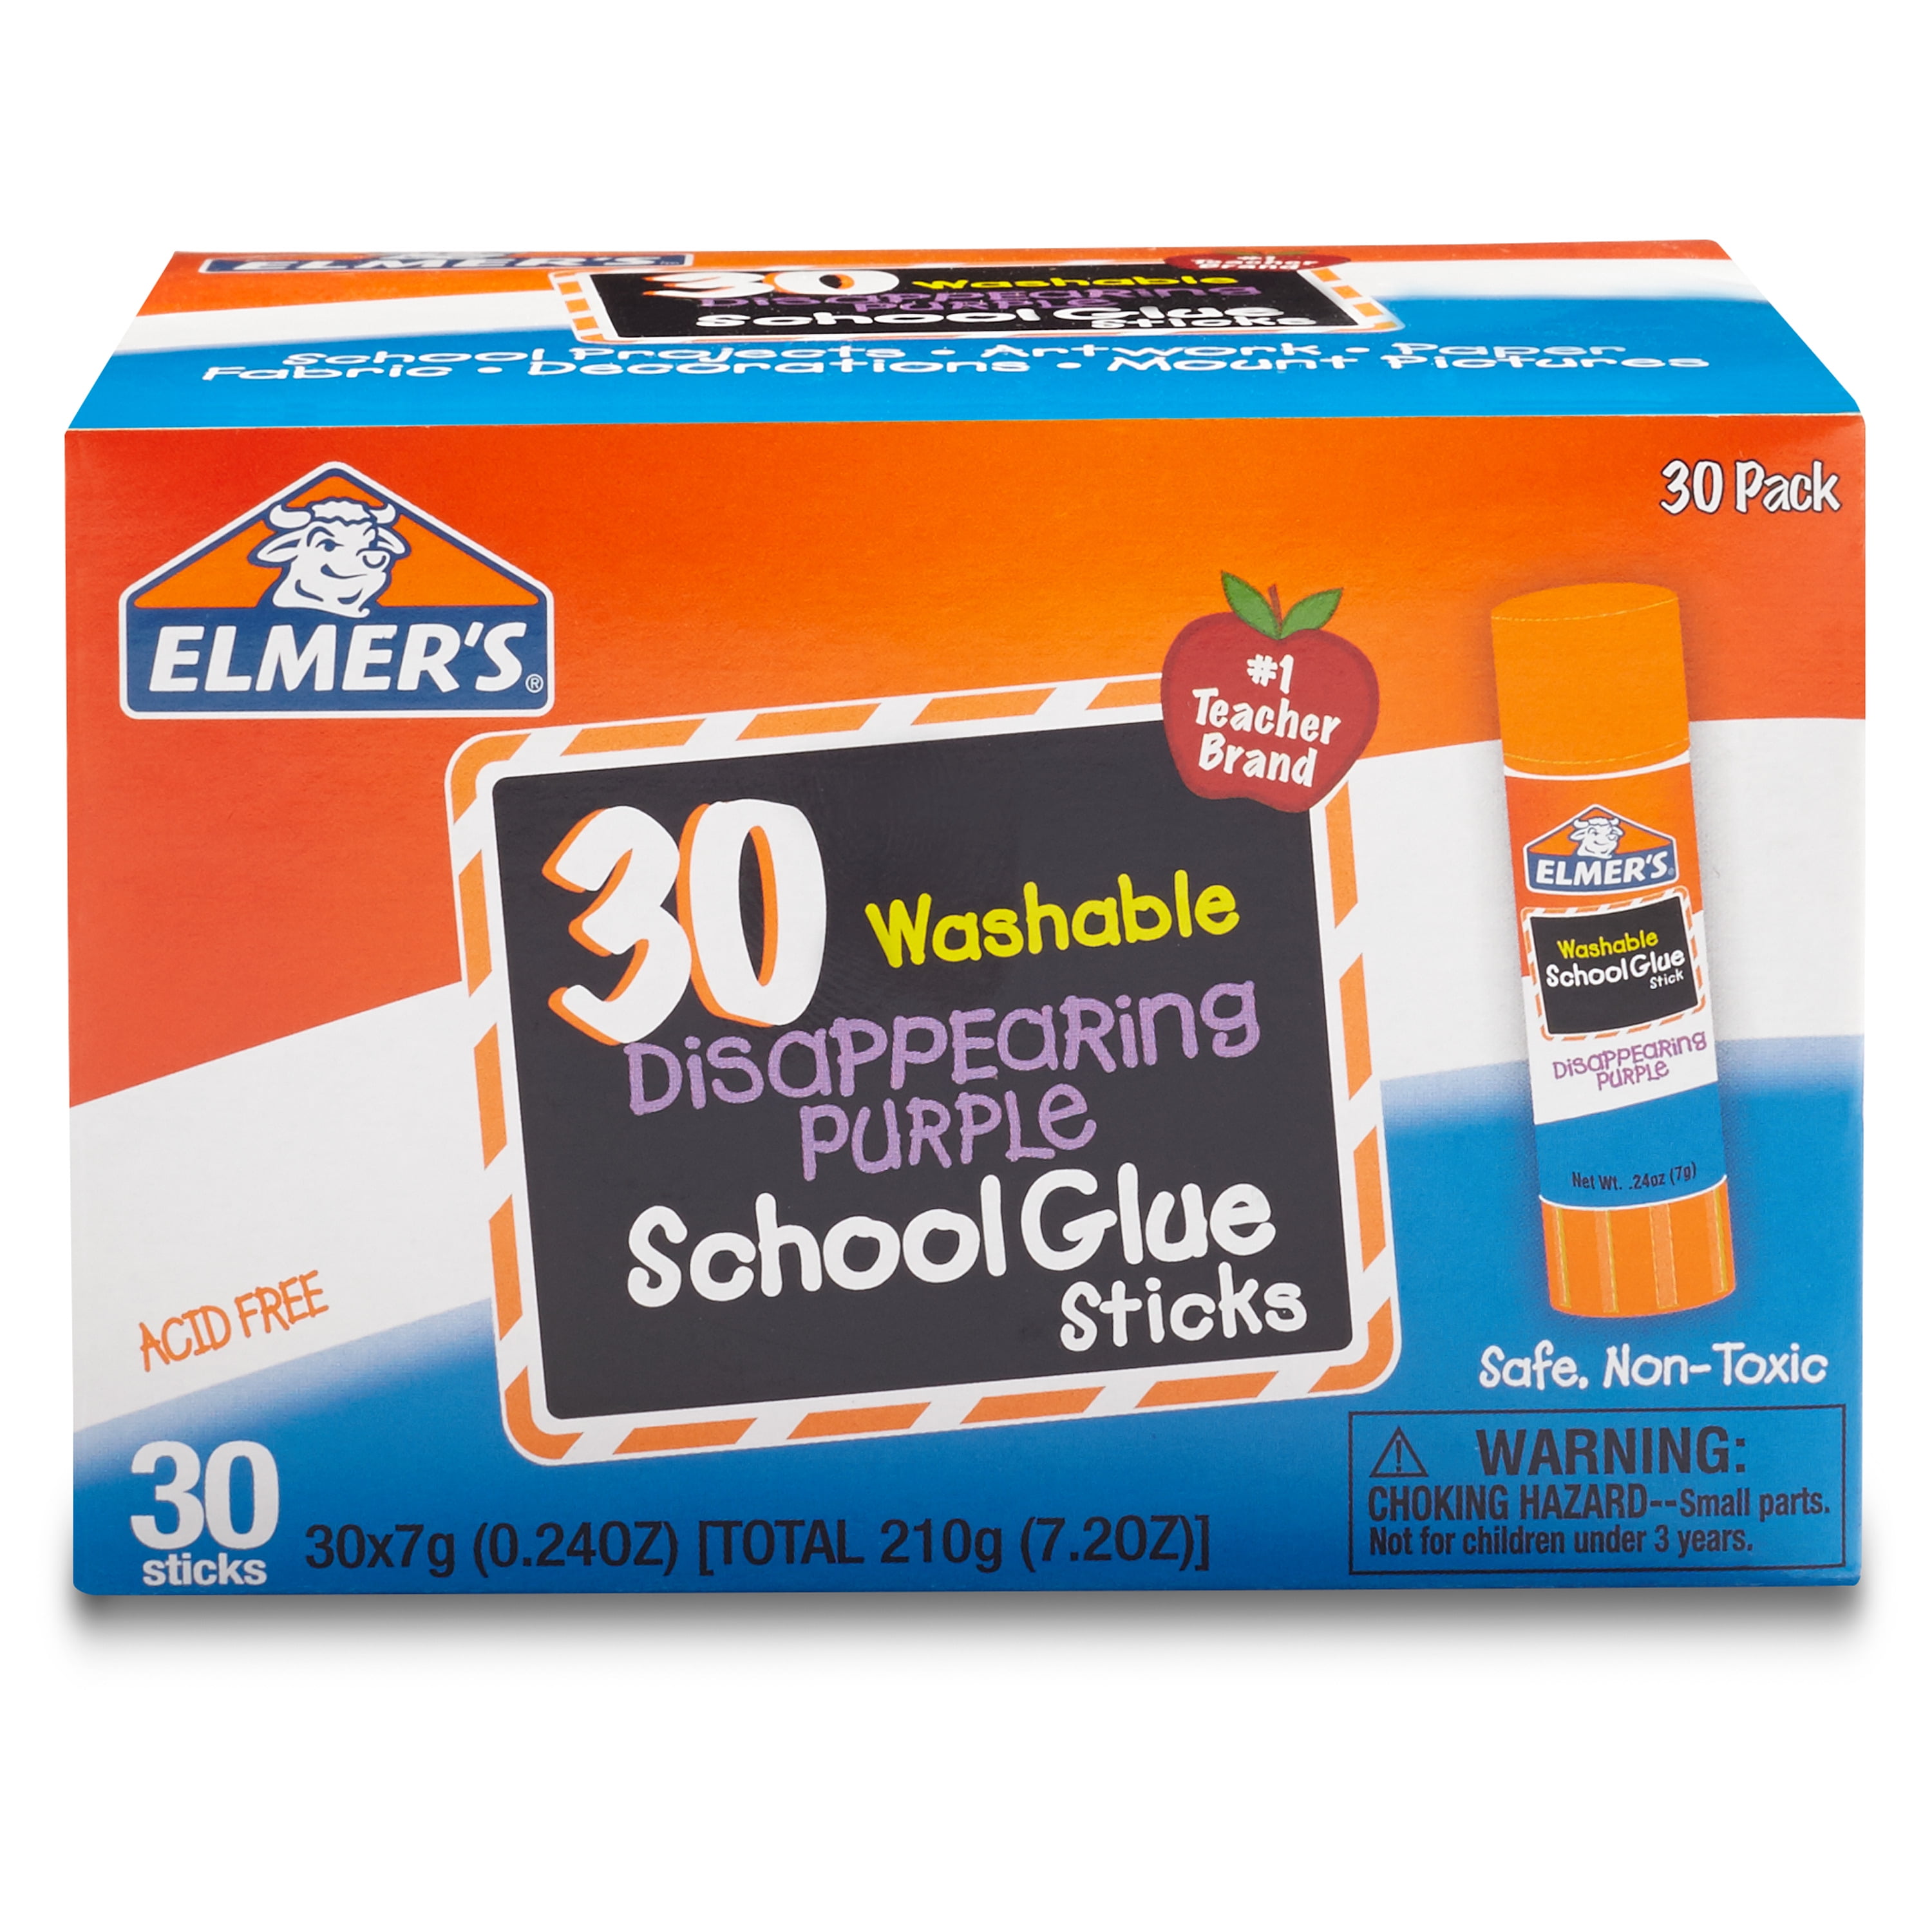 Glue Sticks 1.3 Ounce - 4 Count Glue Stick, All Purpose White Glue Sticks for Kids, Washable Glue Sticks Bulk - Large Glue Sticks for School and